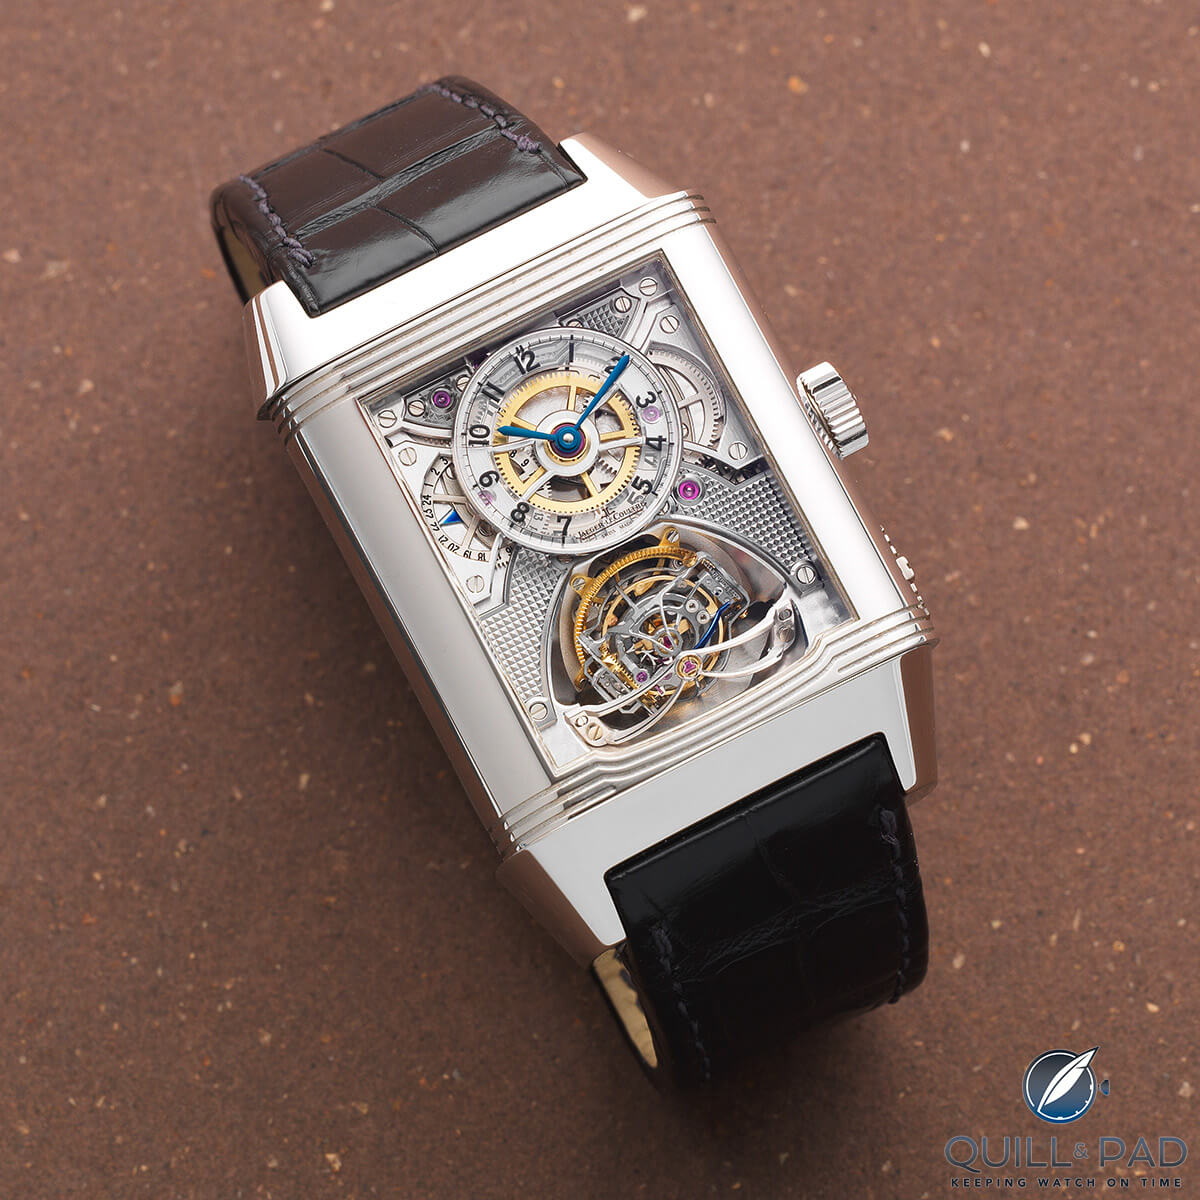 Jaeger-LeCoultre Gyrotourbillon 2 is Lot 115 at the Bonham's June 21, 2017 “Fine Watches and Wristwatches” London sale